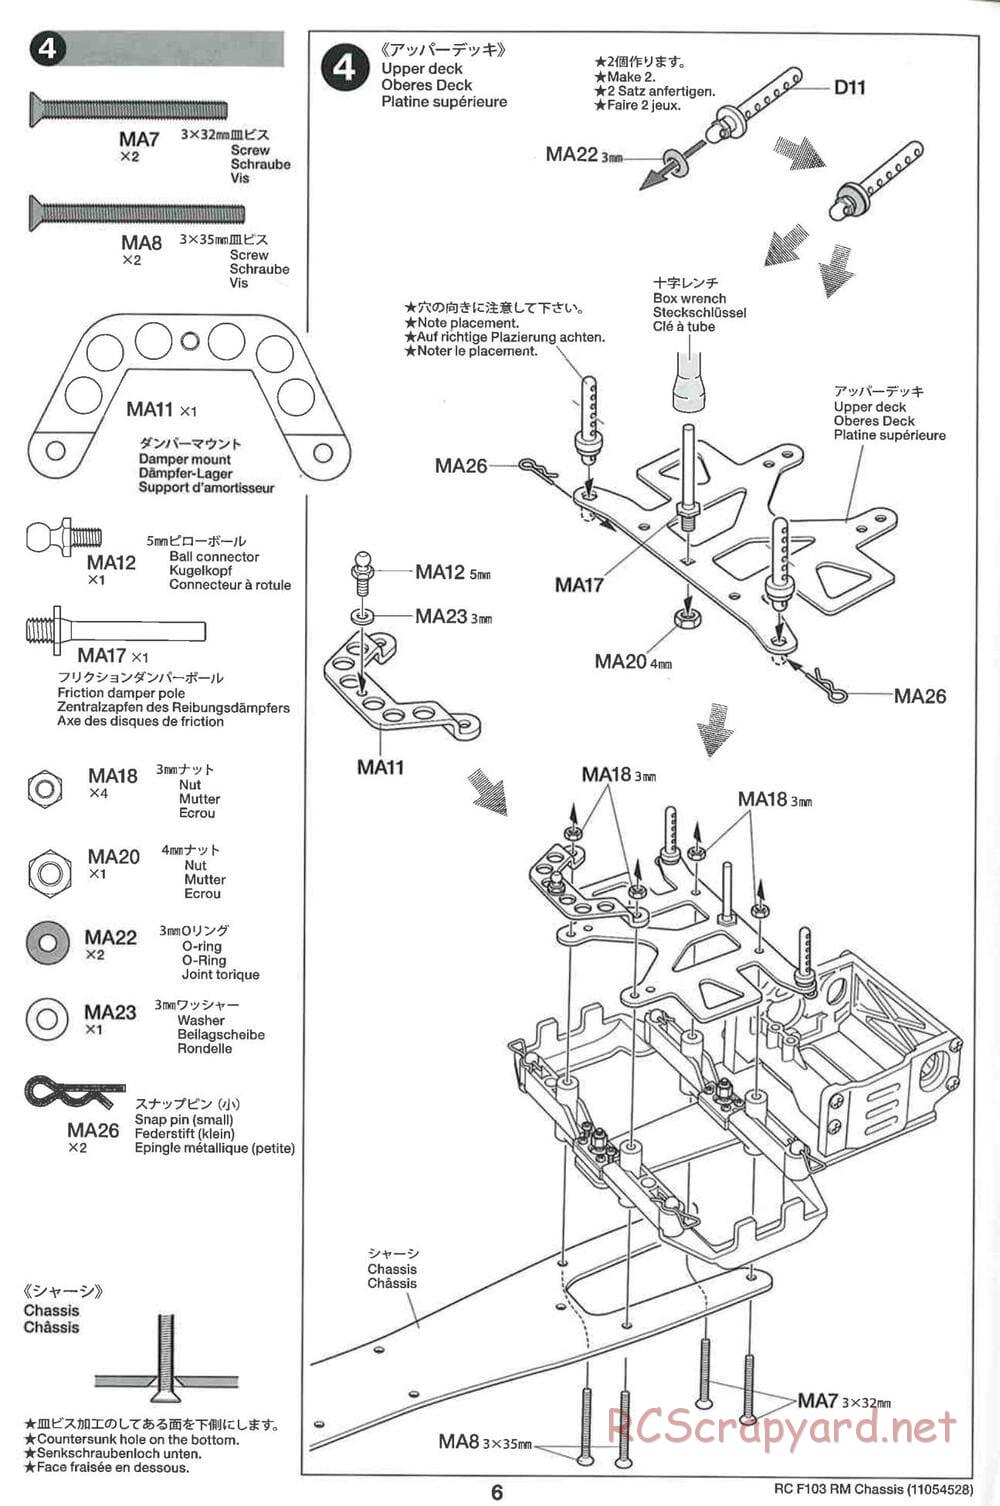 Tamiya - F103RM Chassis - Manual - Page 6